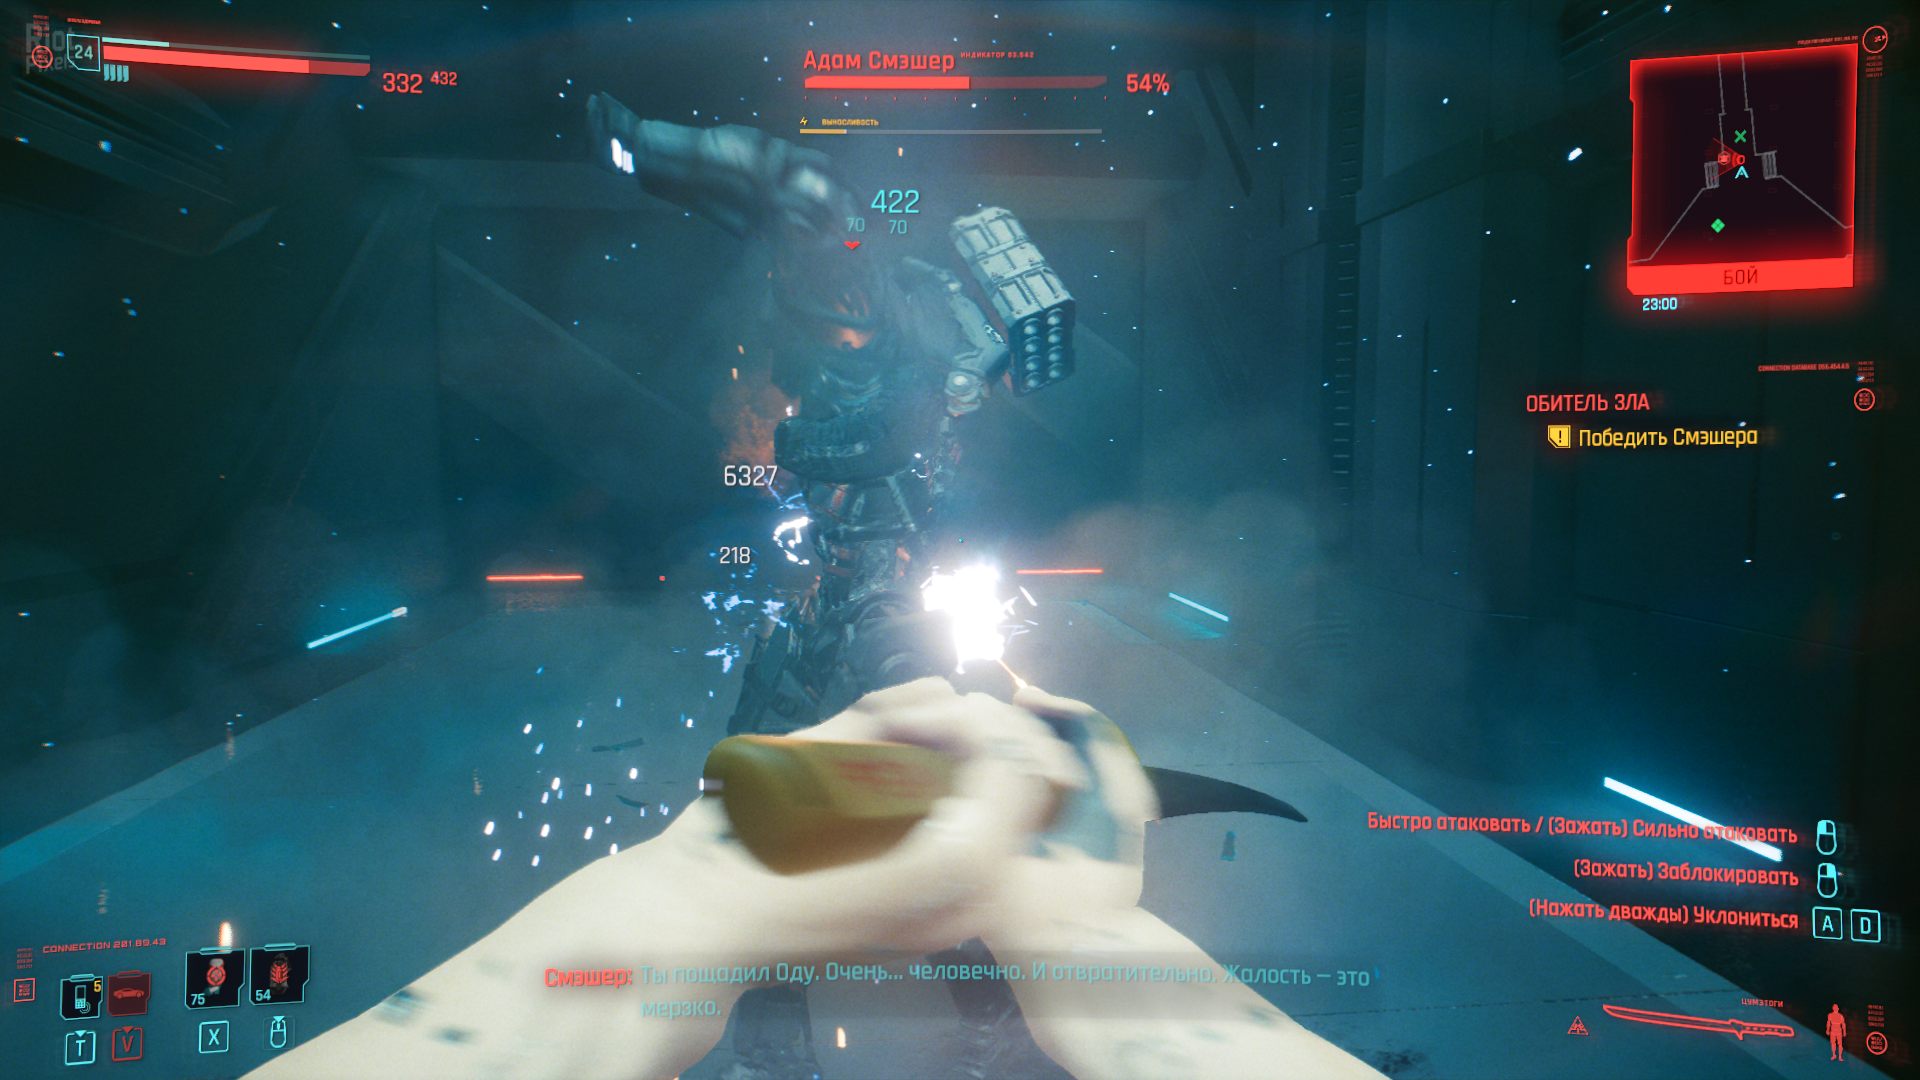 Cyberpunk 2077 - game screenshots at Riot Pixels, images